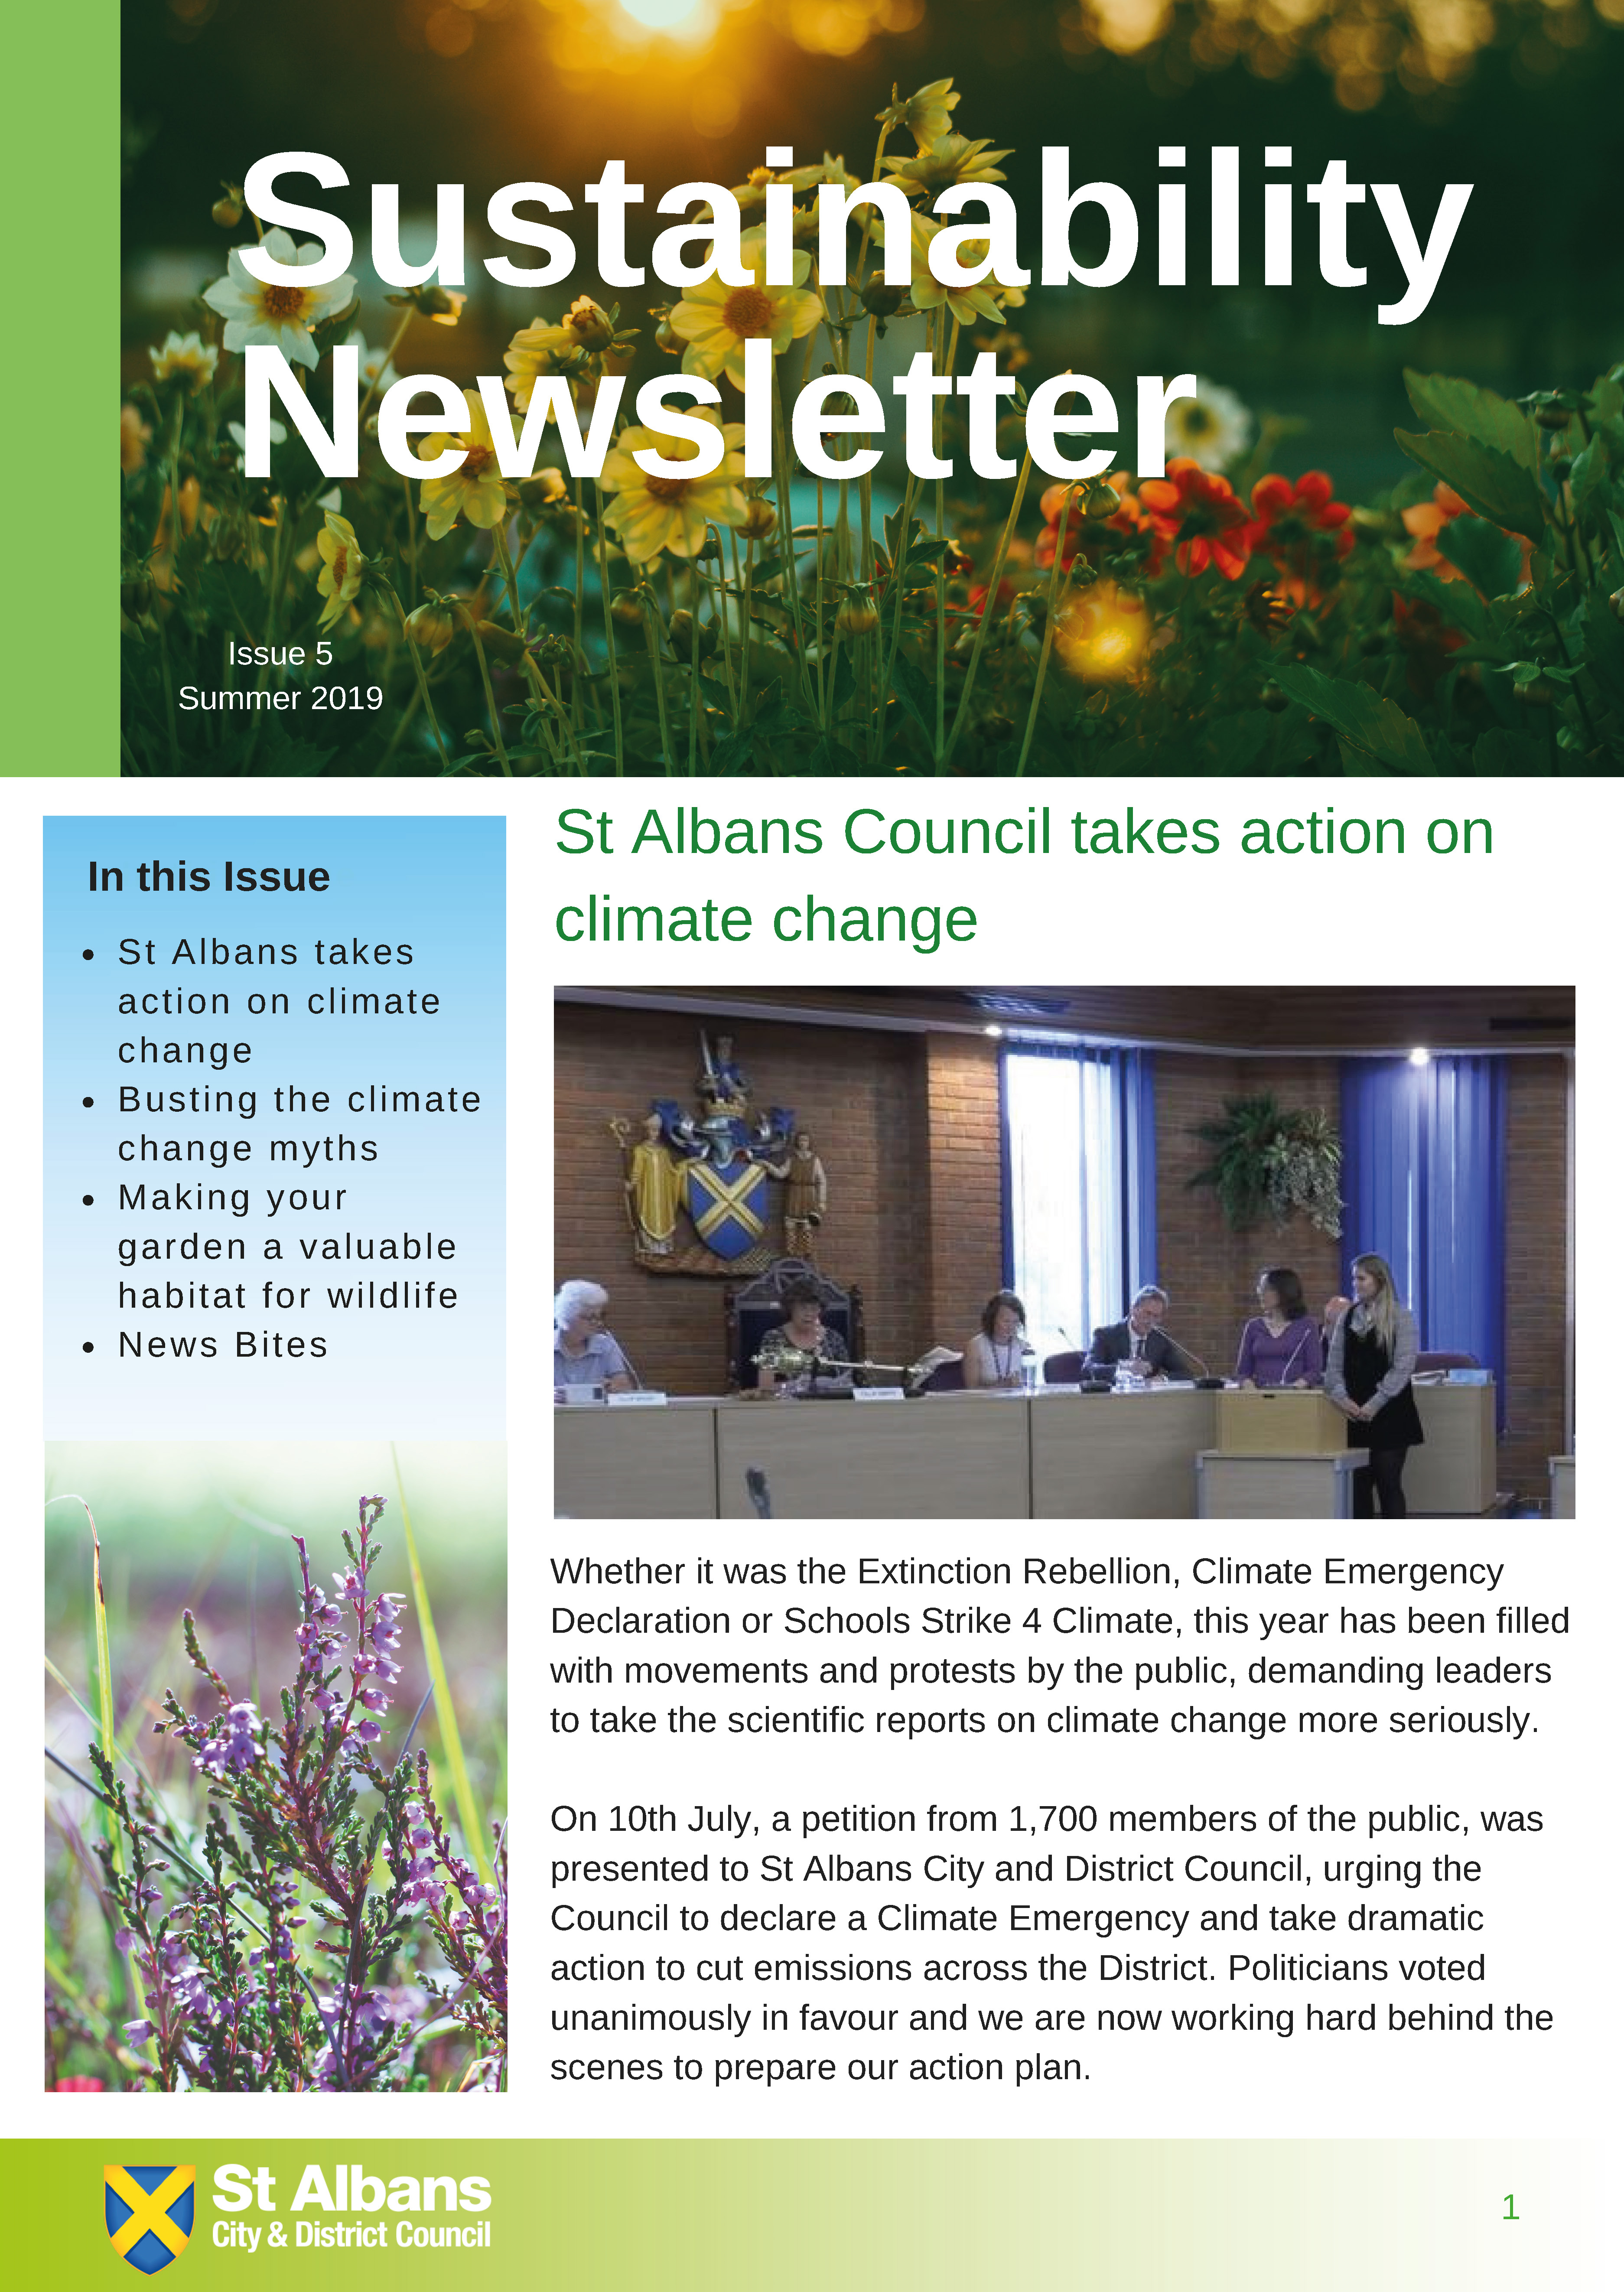 Sustainability News - Issue 5